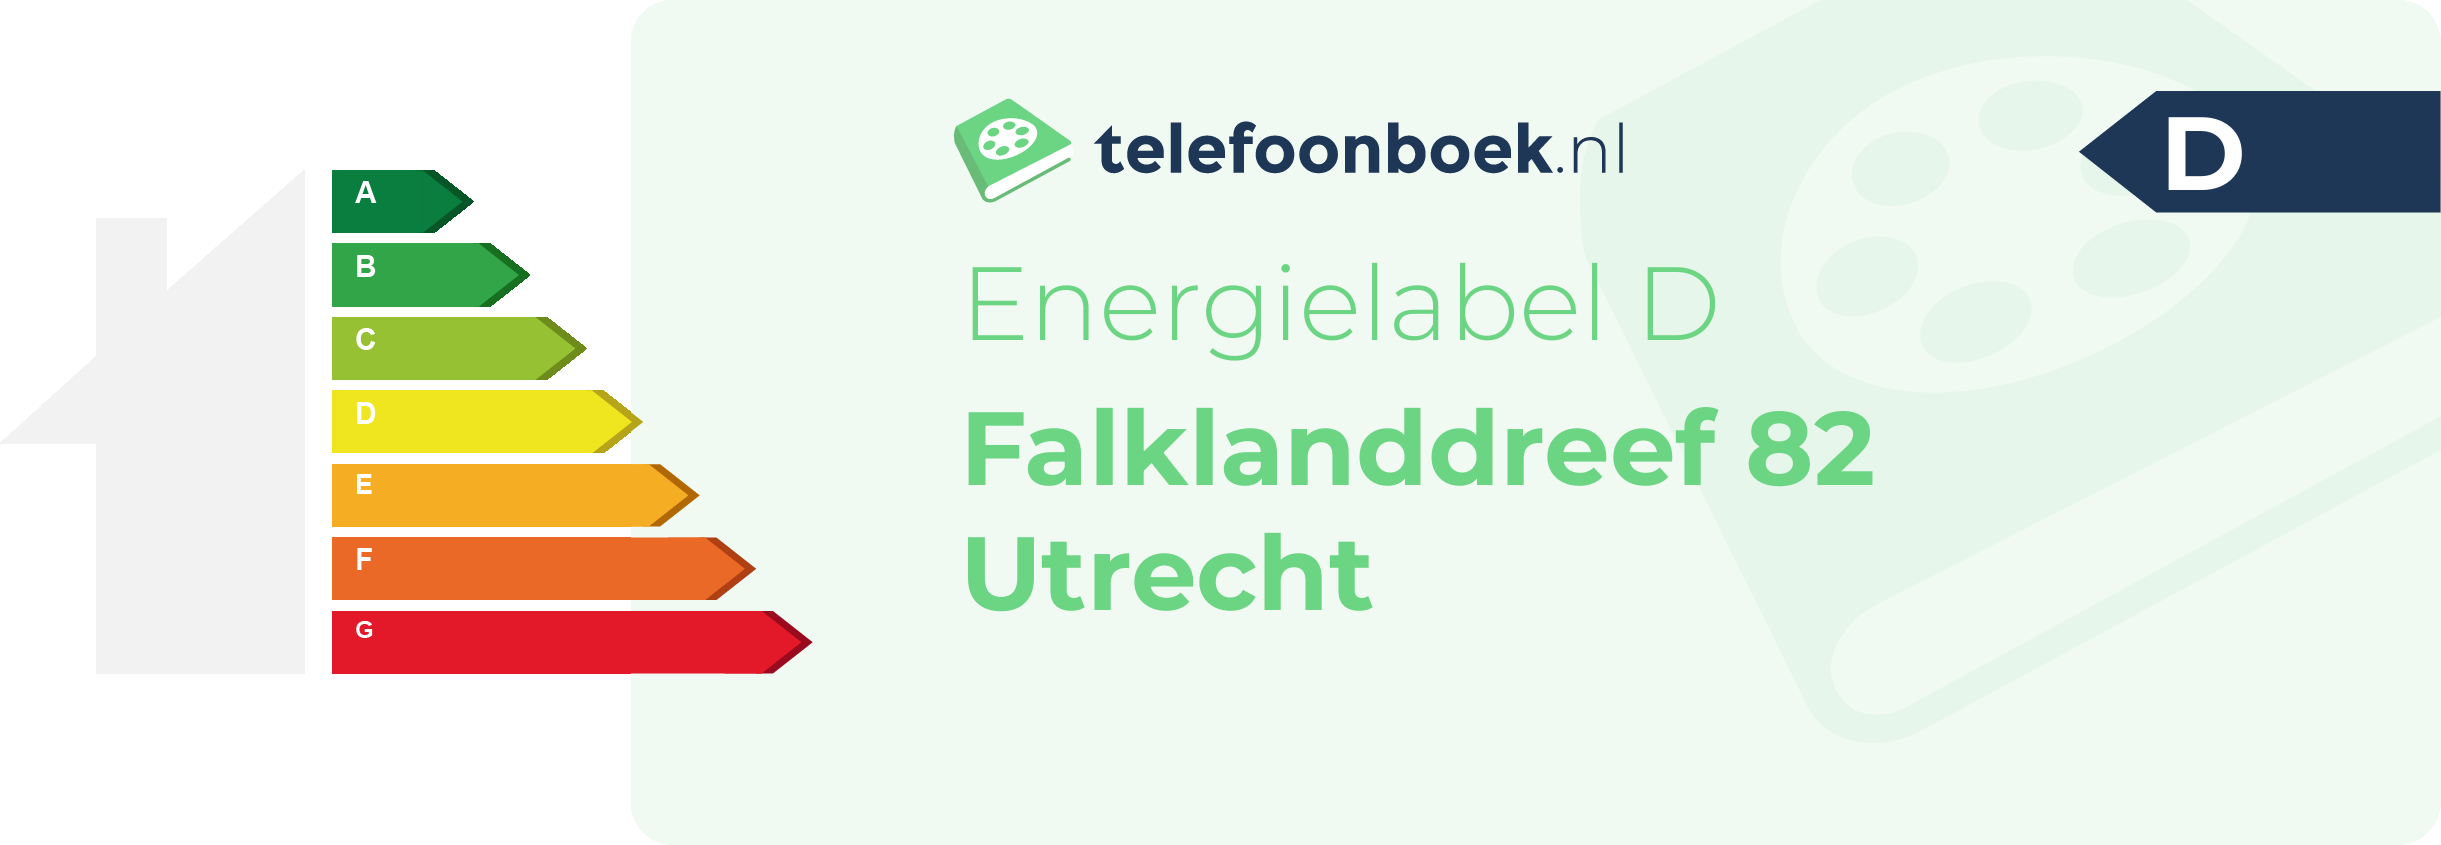 Energielabel Falklanddreef 82 Utrecht